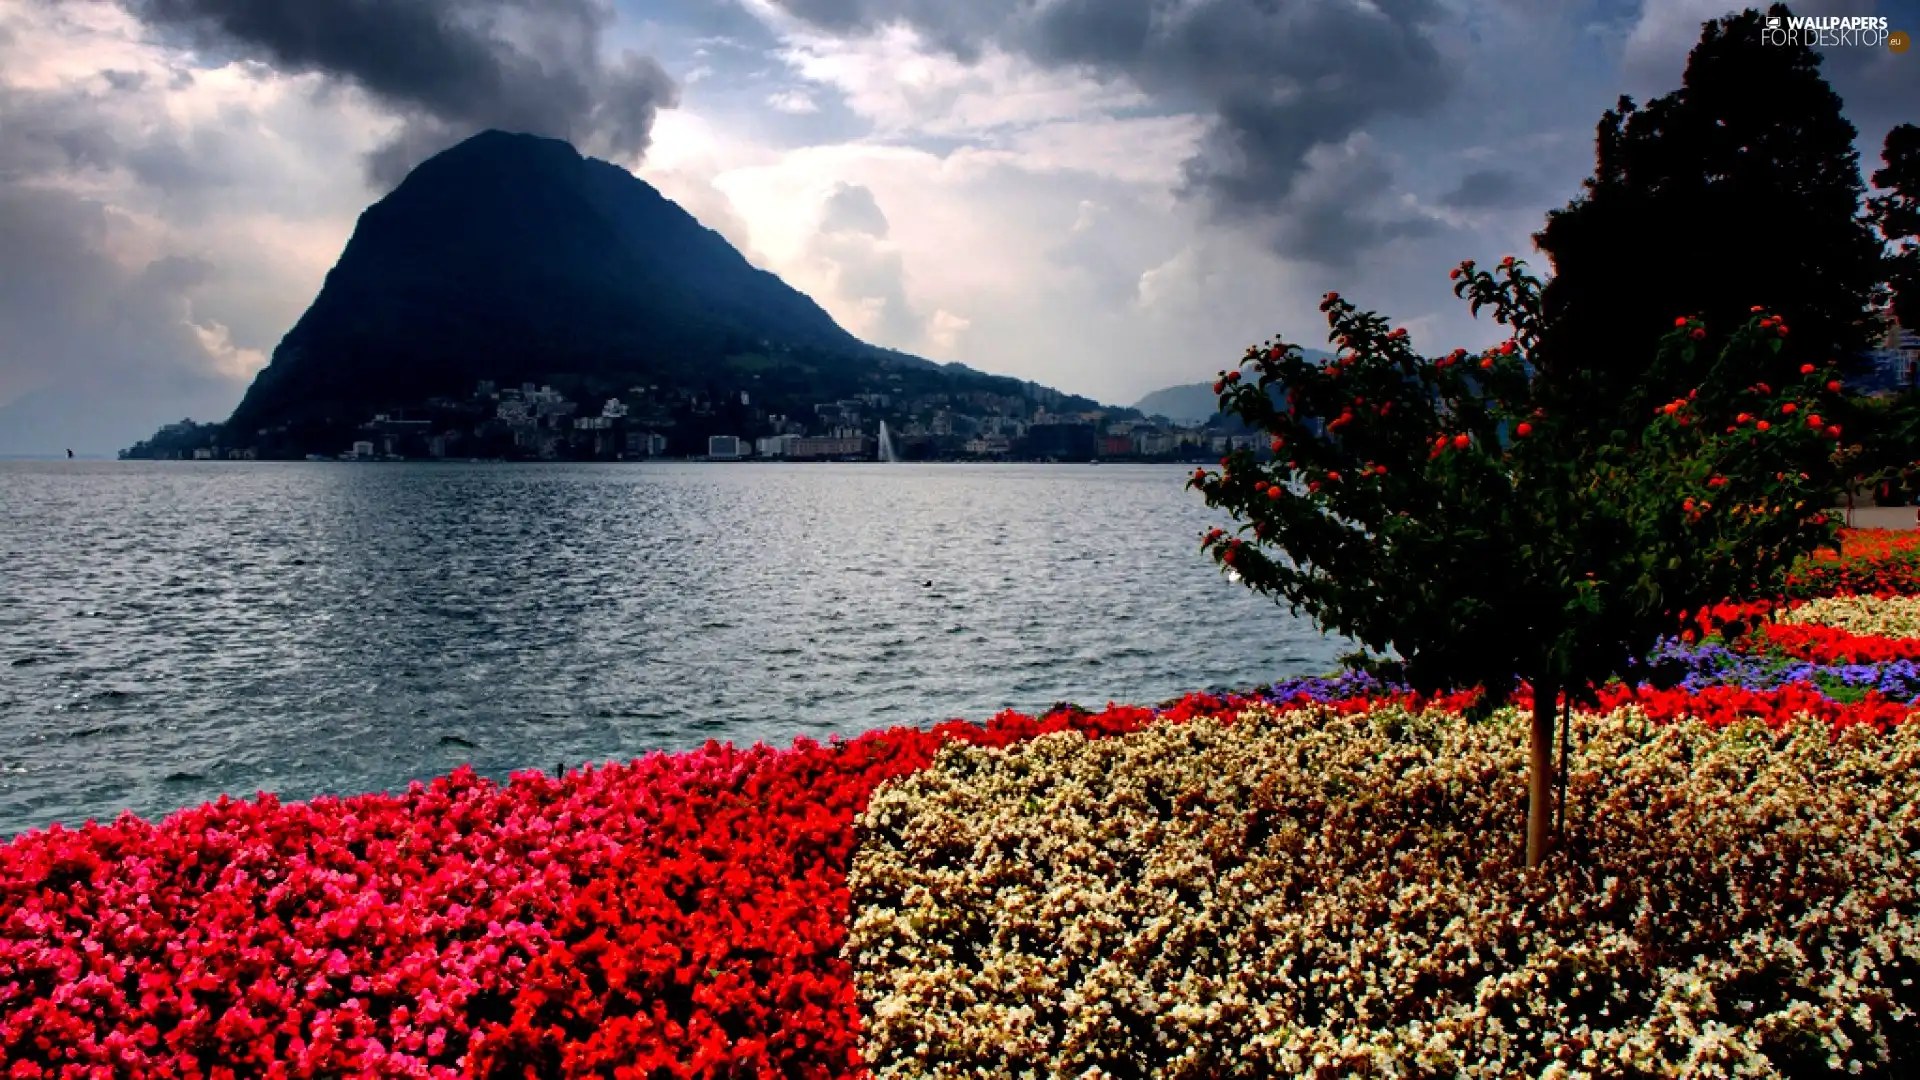 Flowers, mountains, lake